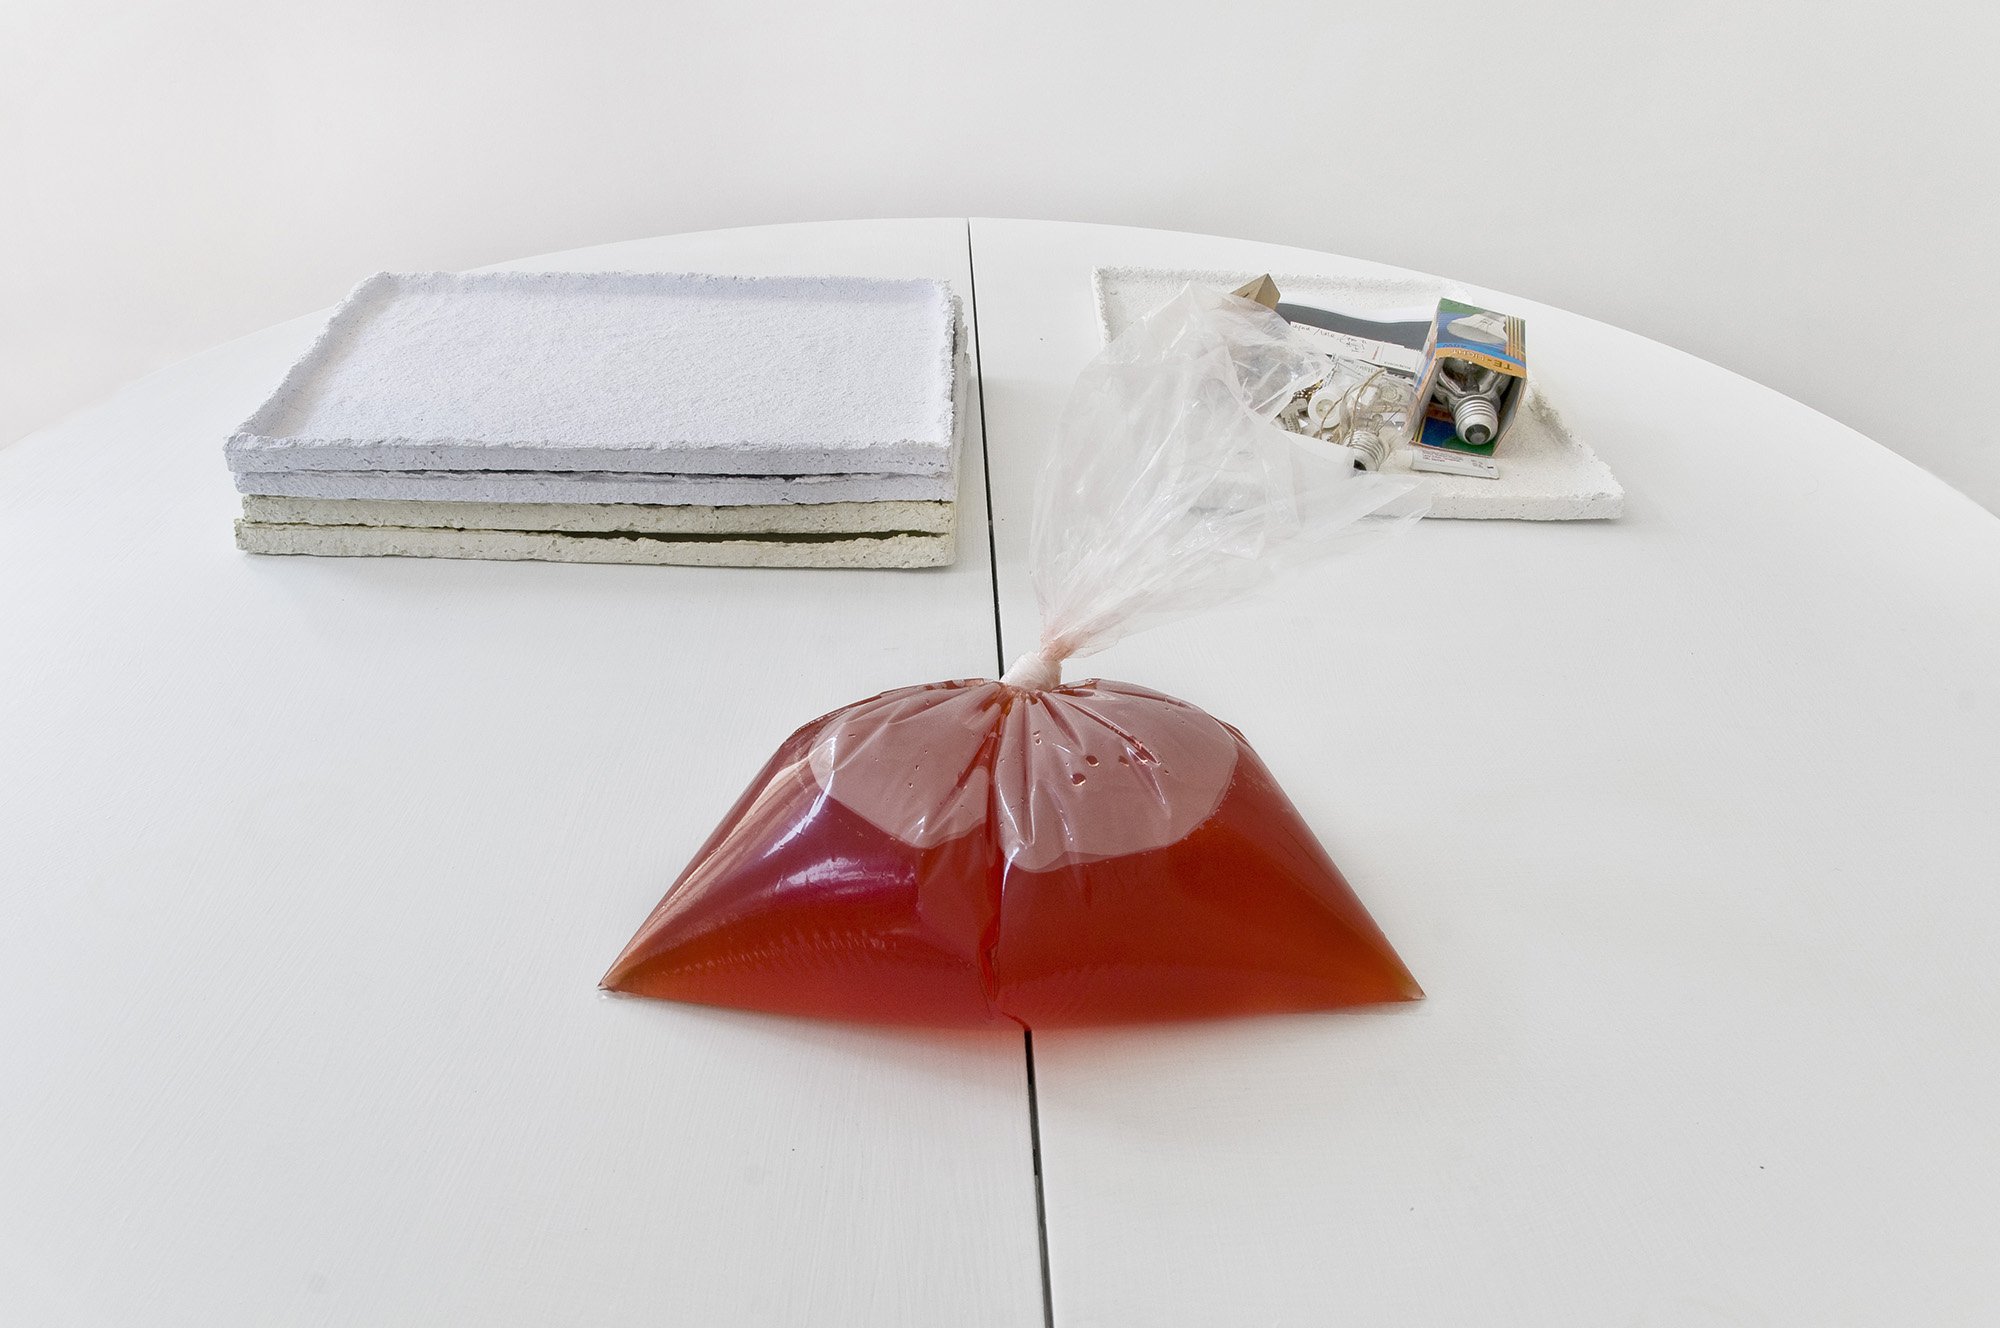 Ian Law, run off, residual water, paper dye, baking powder, adhesive in plastic bag, 2012. Installation view, Make Sure, Rodeo, Istanbul, 2012